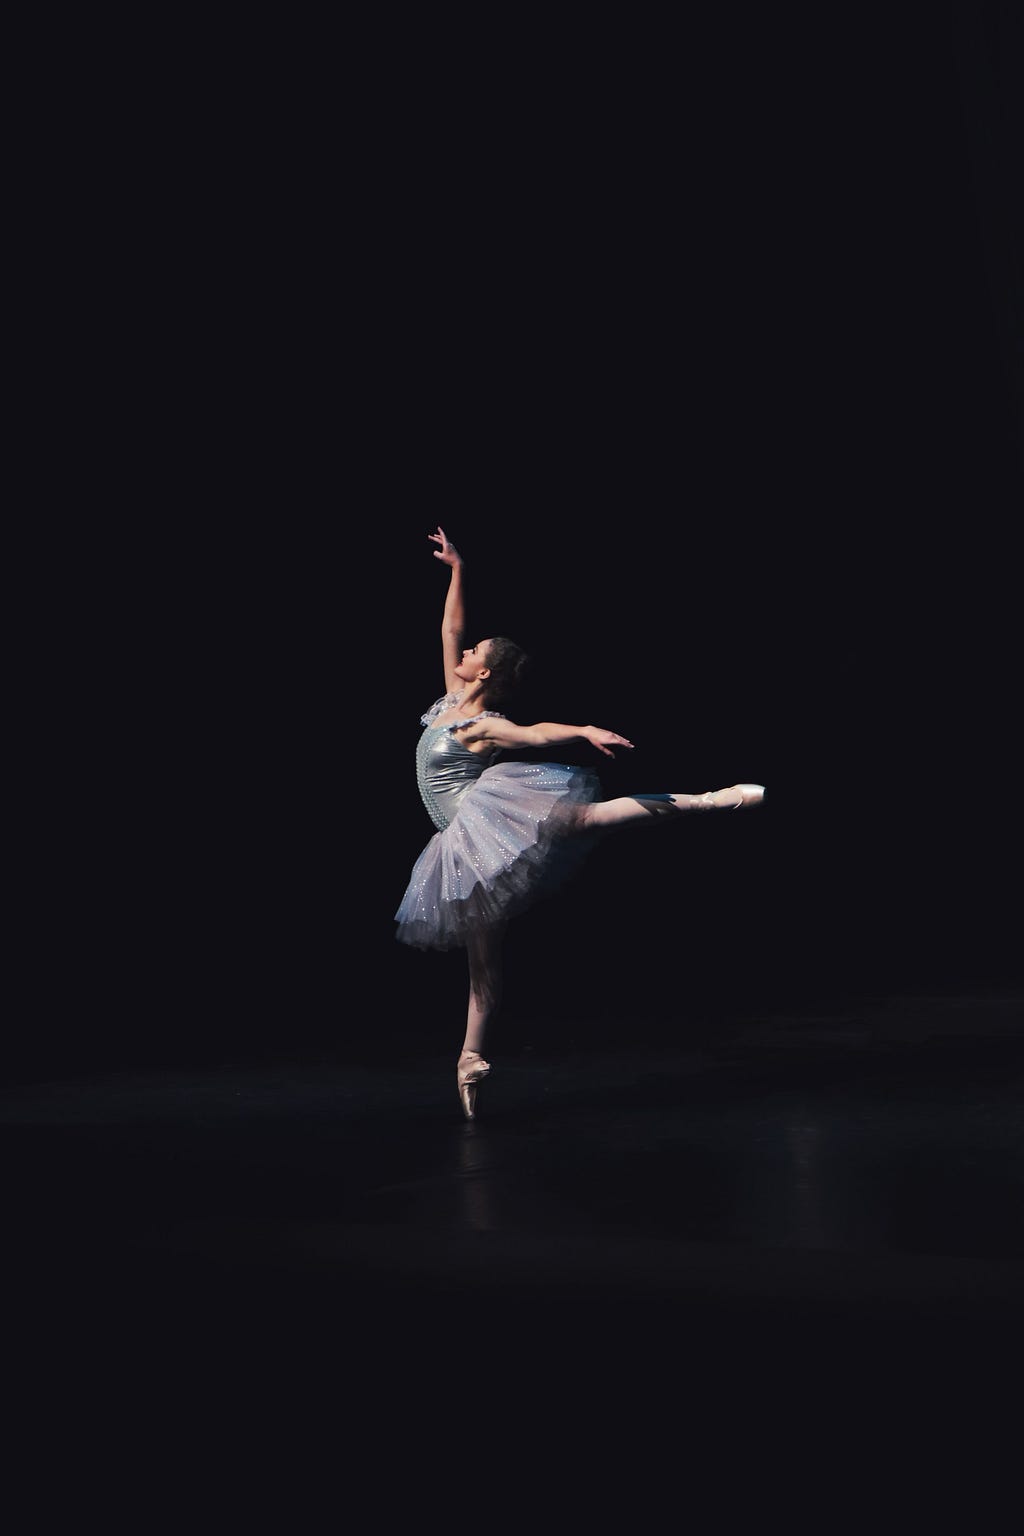 A ballet dancer in arabesque position.